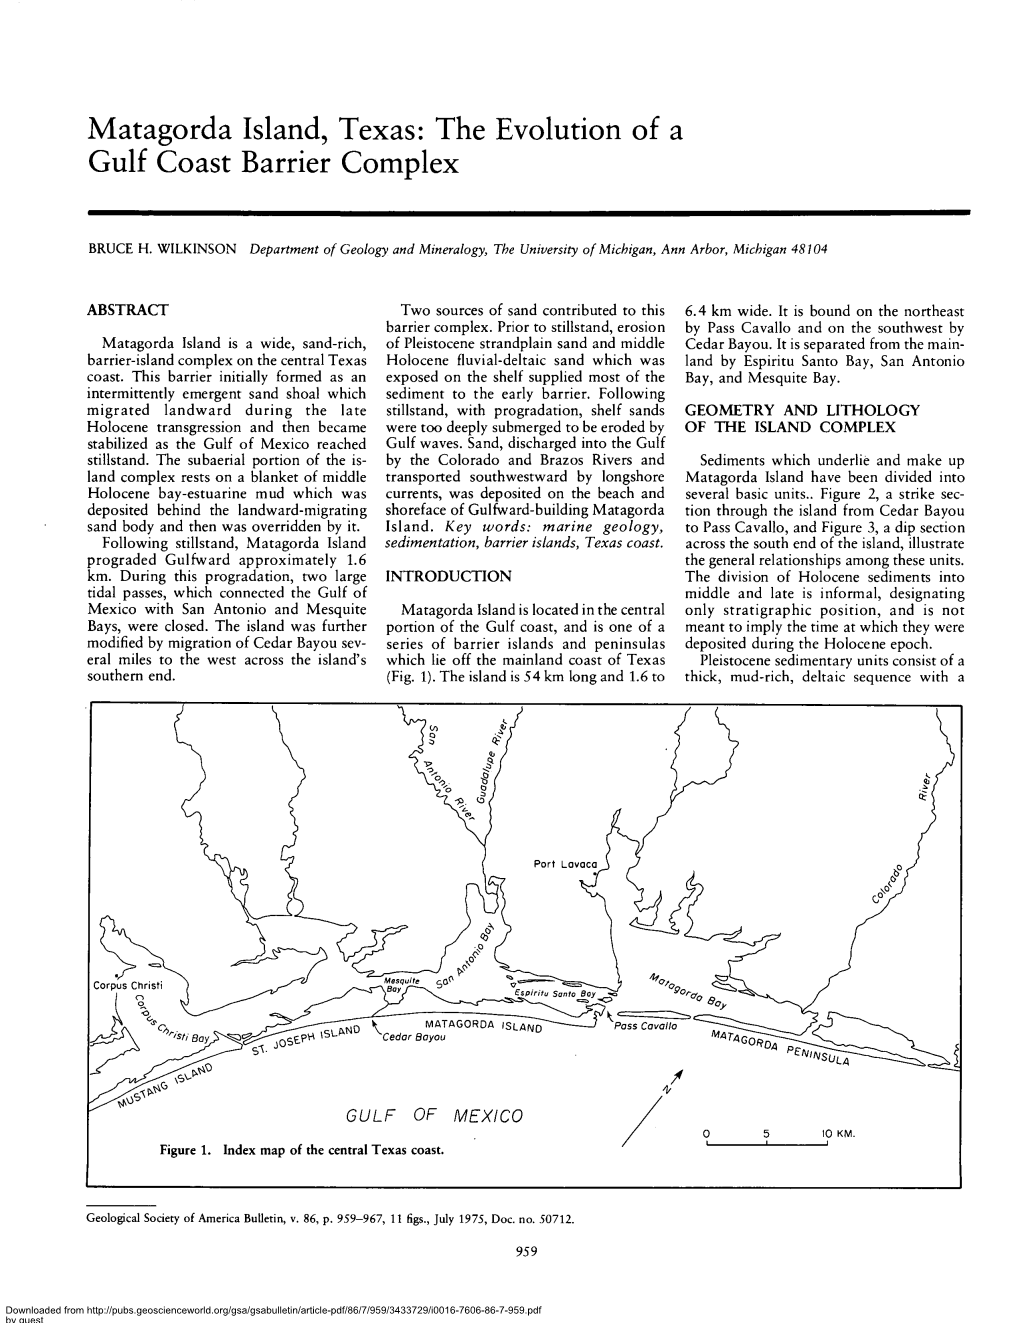 Matagorda Island, Texas: the Evolution of a Gulf Coast Barrier Complex